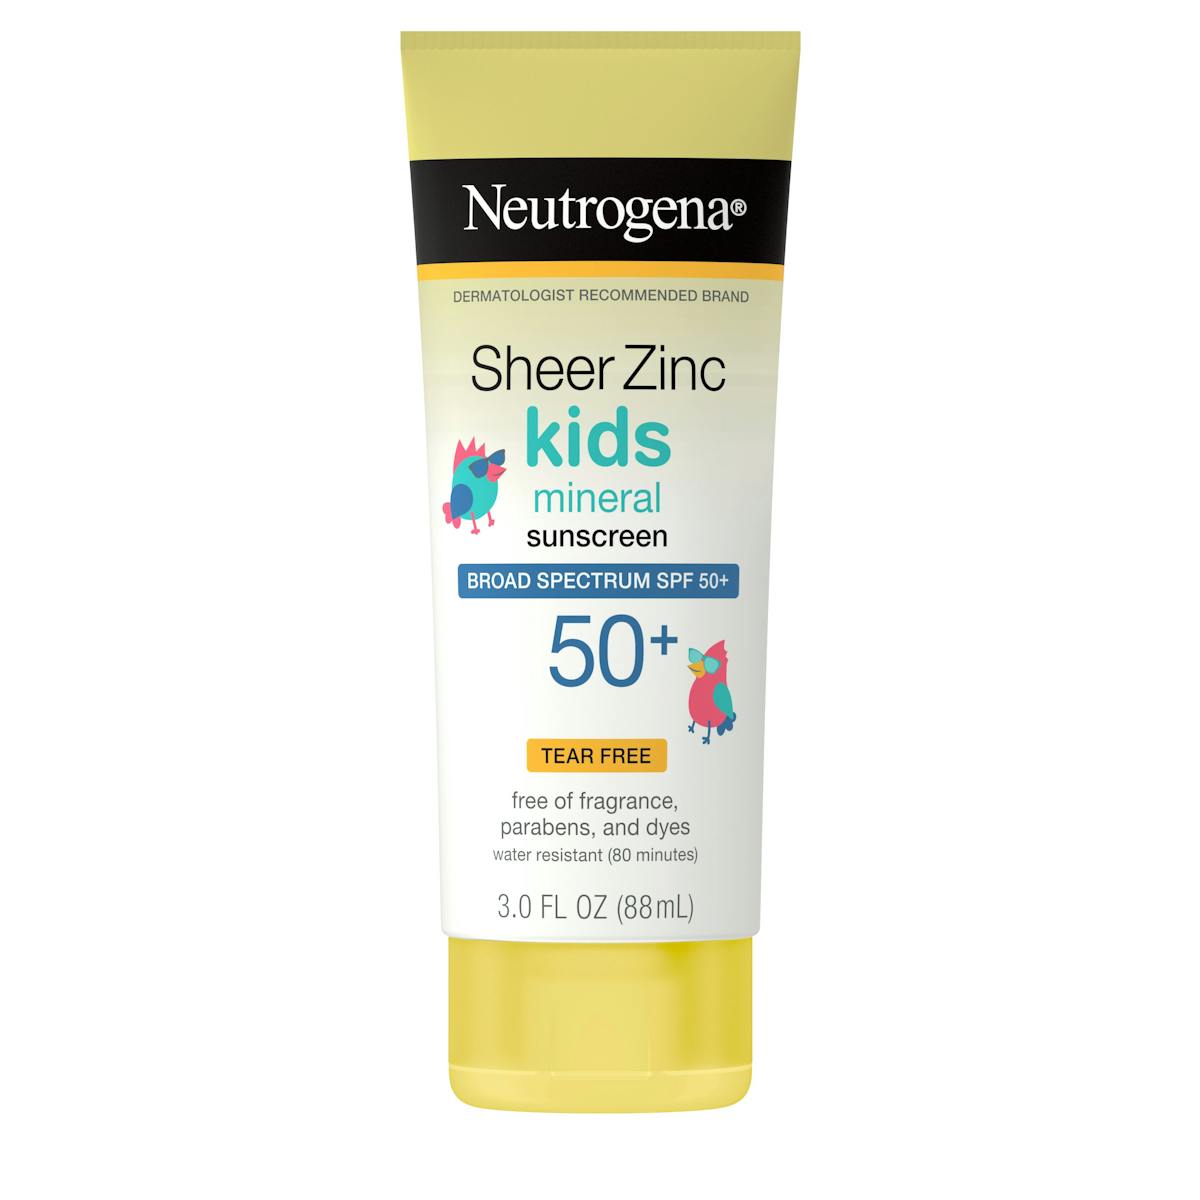 Sun Creme Sensitive Protect SPF 50+, sunscreen for sensitive, dry skin